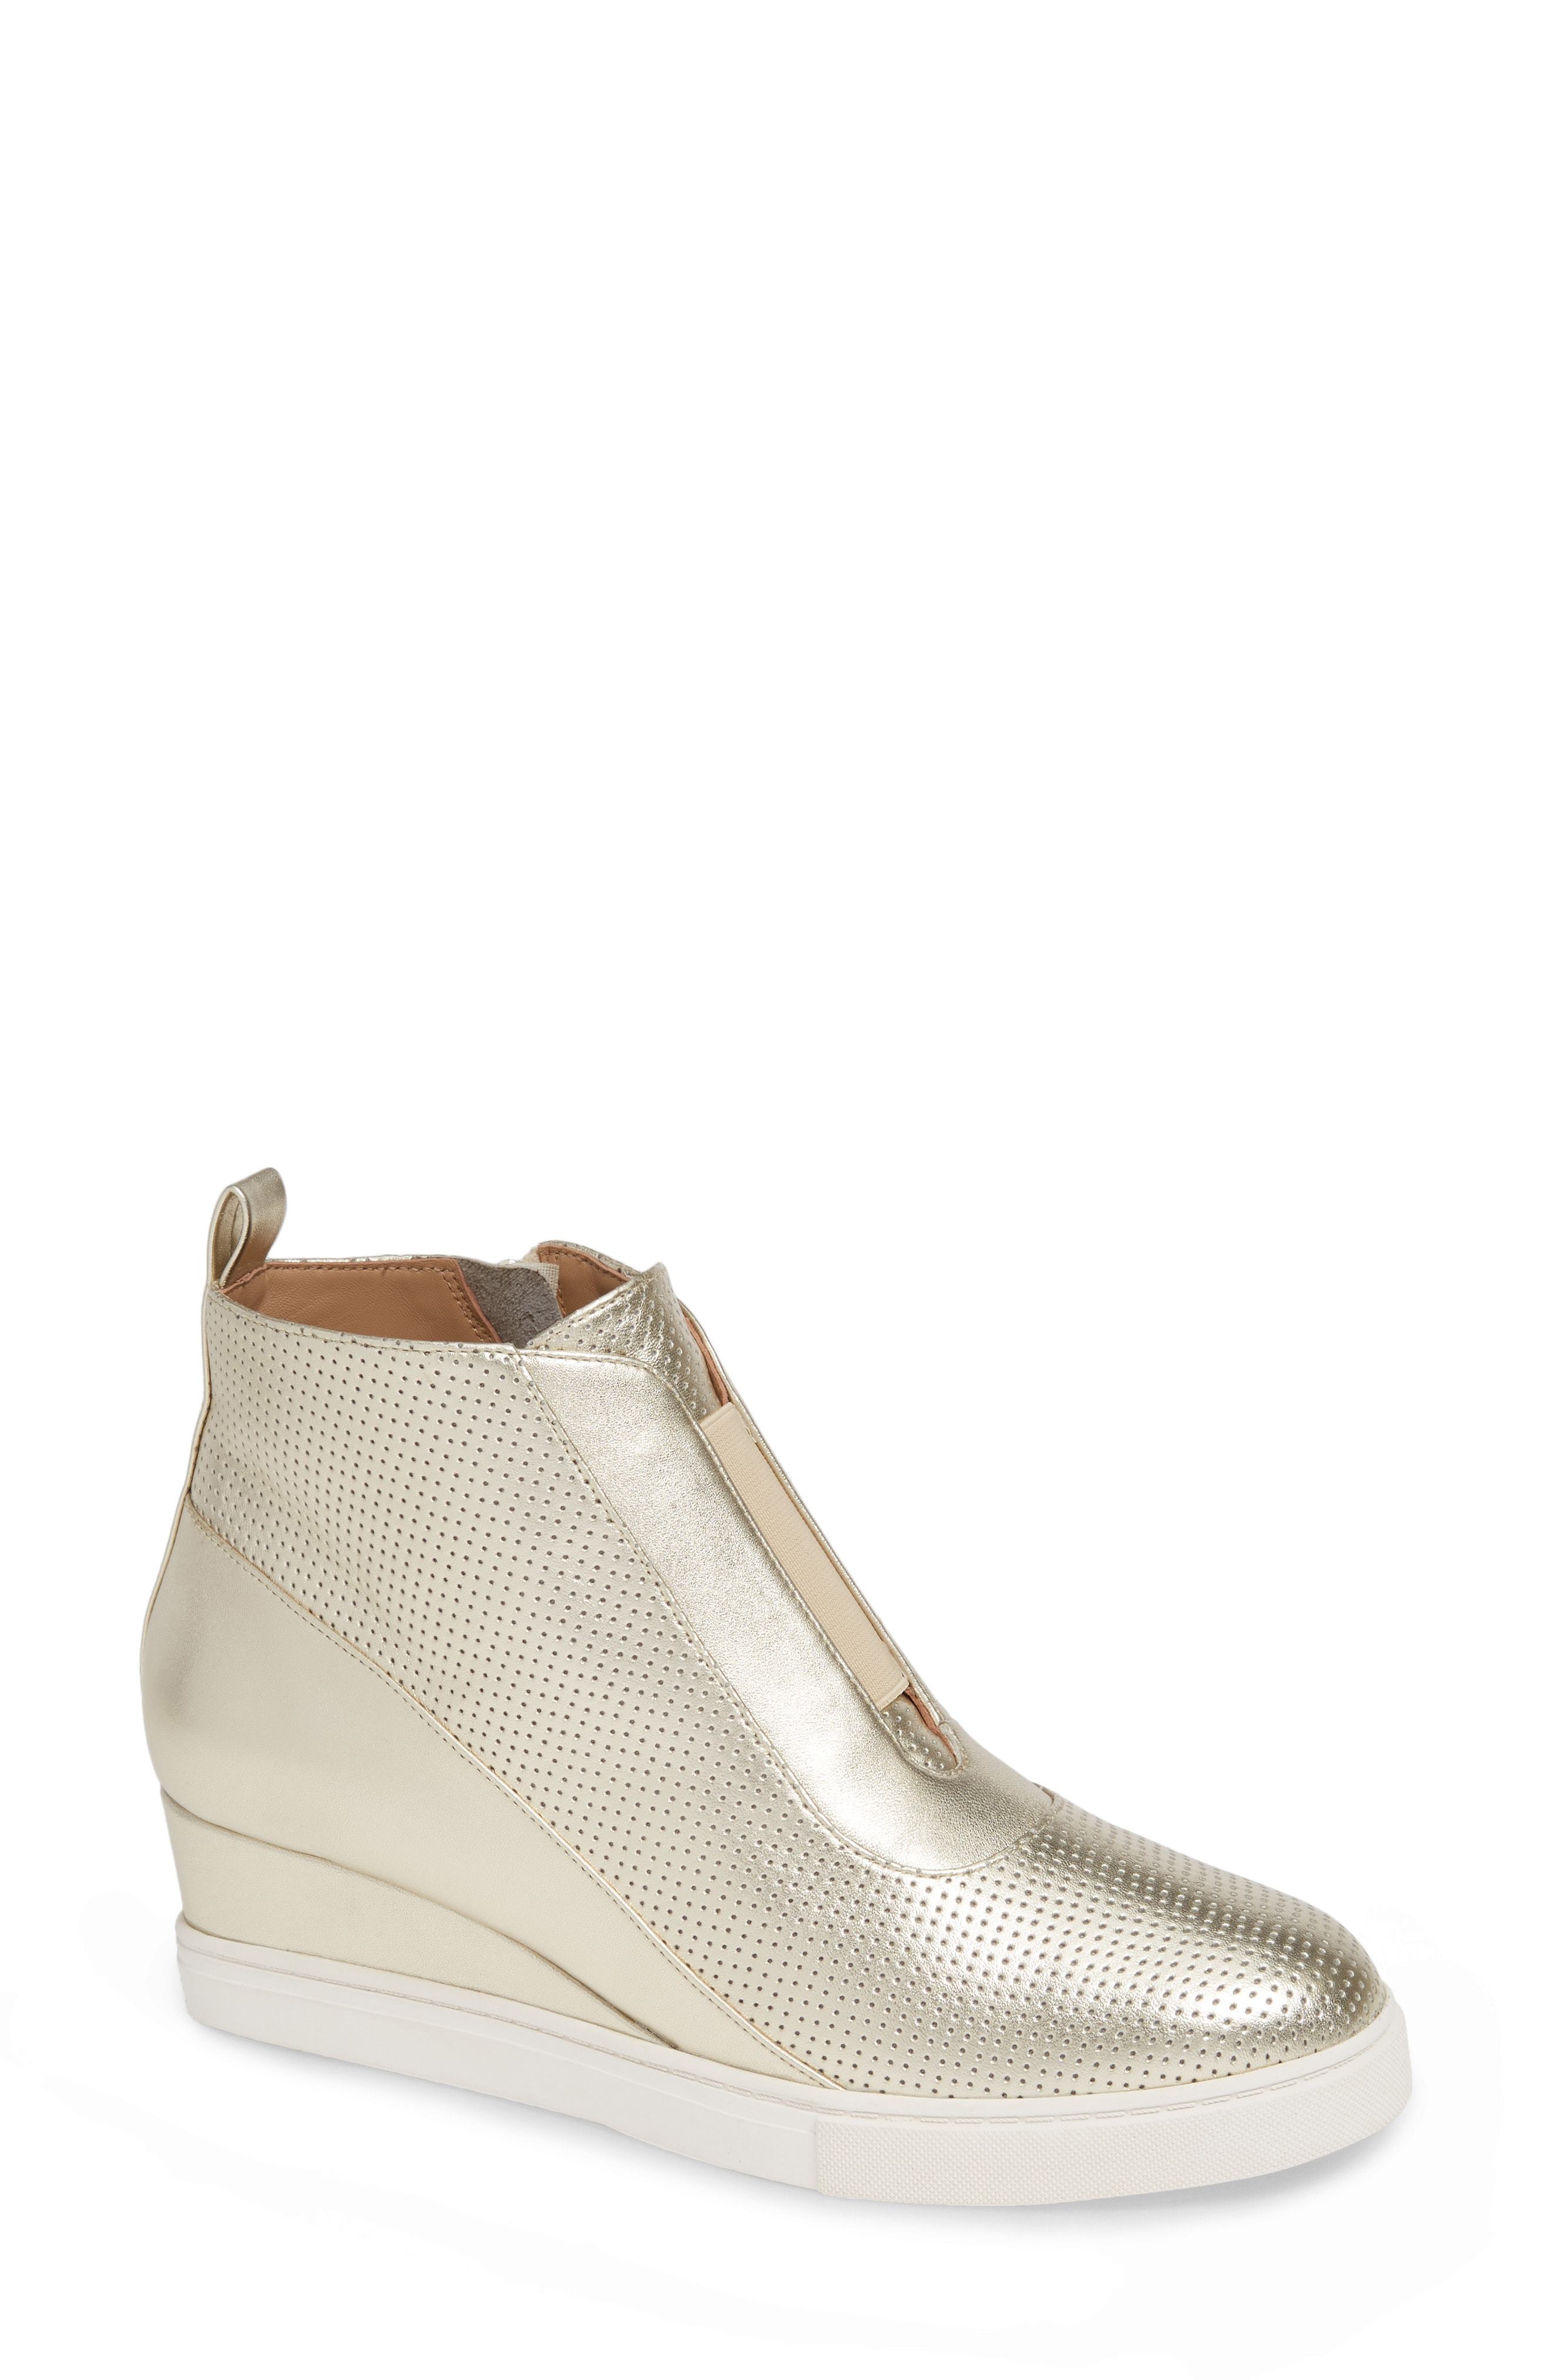 Linea Paolo Anna Wedge Sneaker, $119 